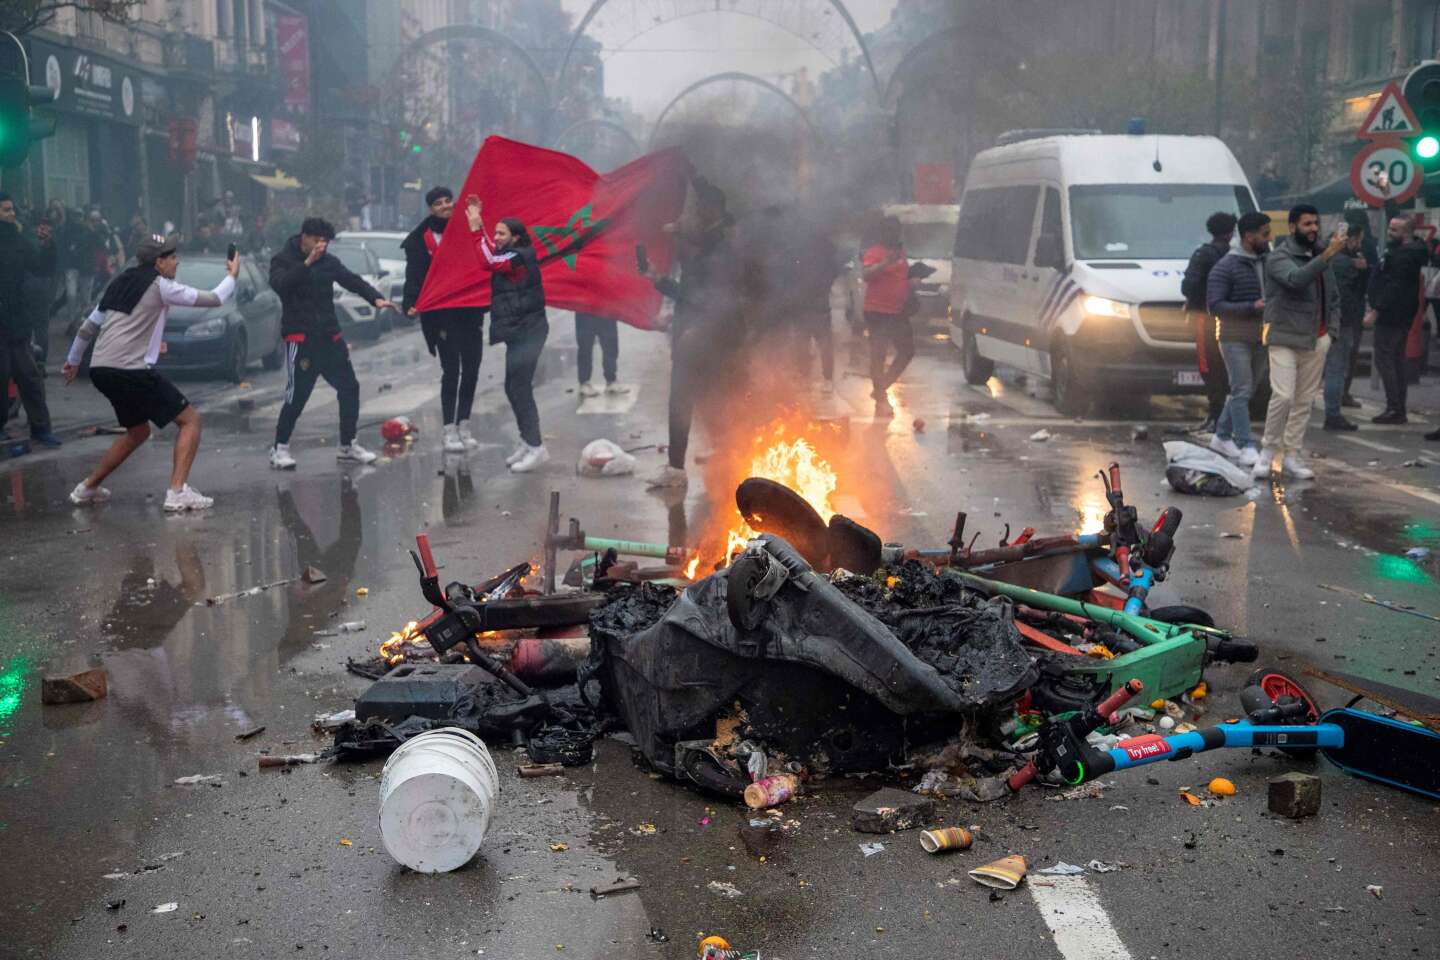 A Bruxelles, des incidents violents avant mme la fin de la rencontre Belgique-Maroc